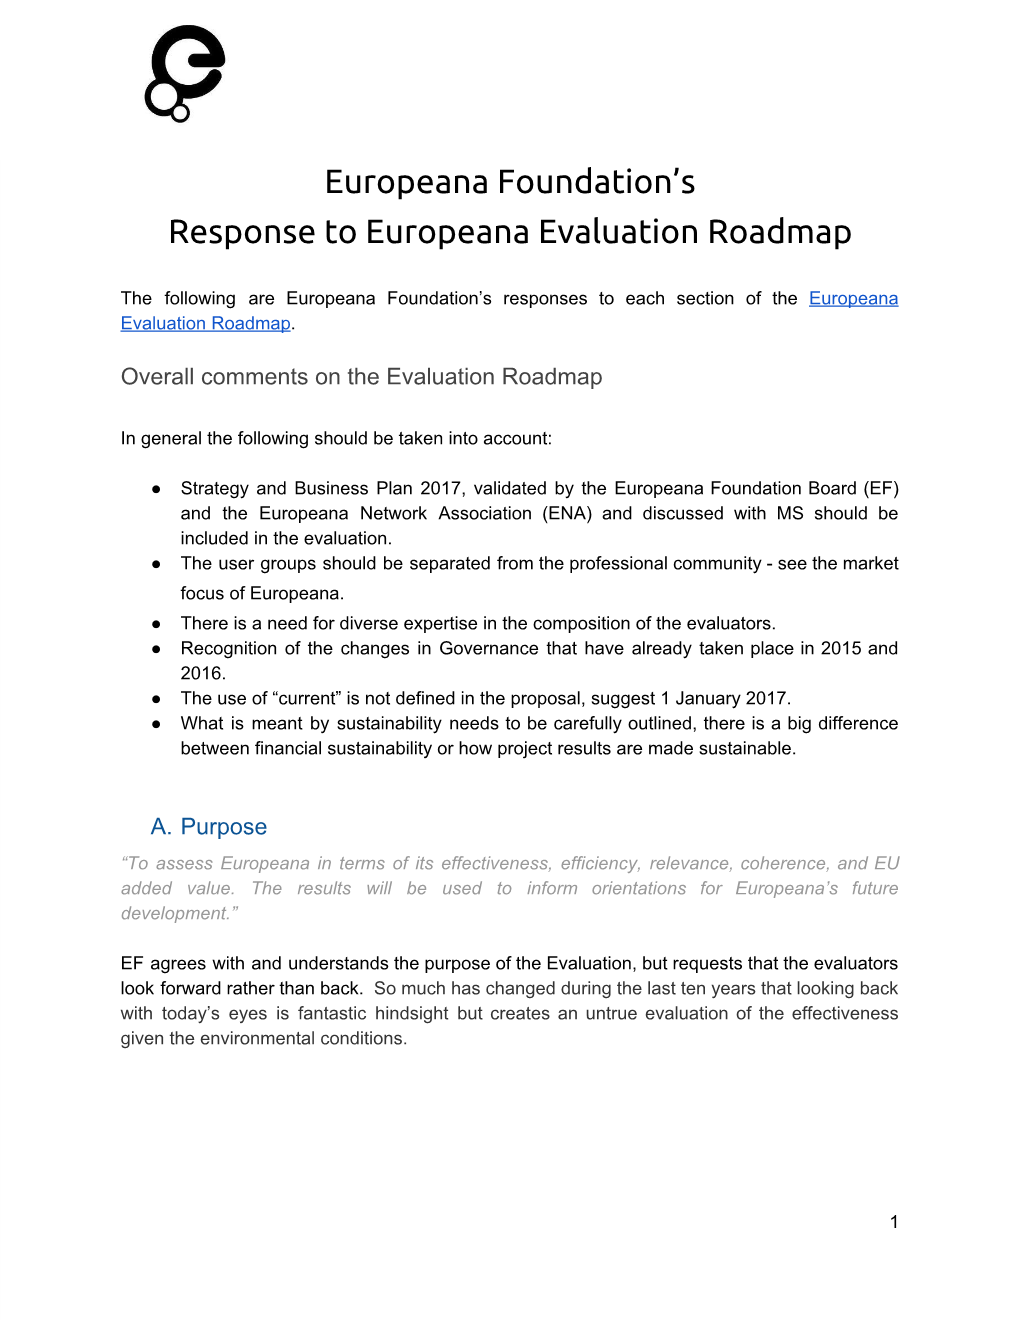 Europeana Foundation's Response to Europeana Evaluation Roadmap